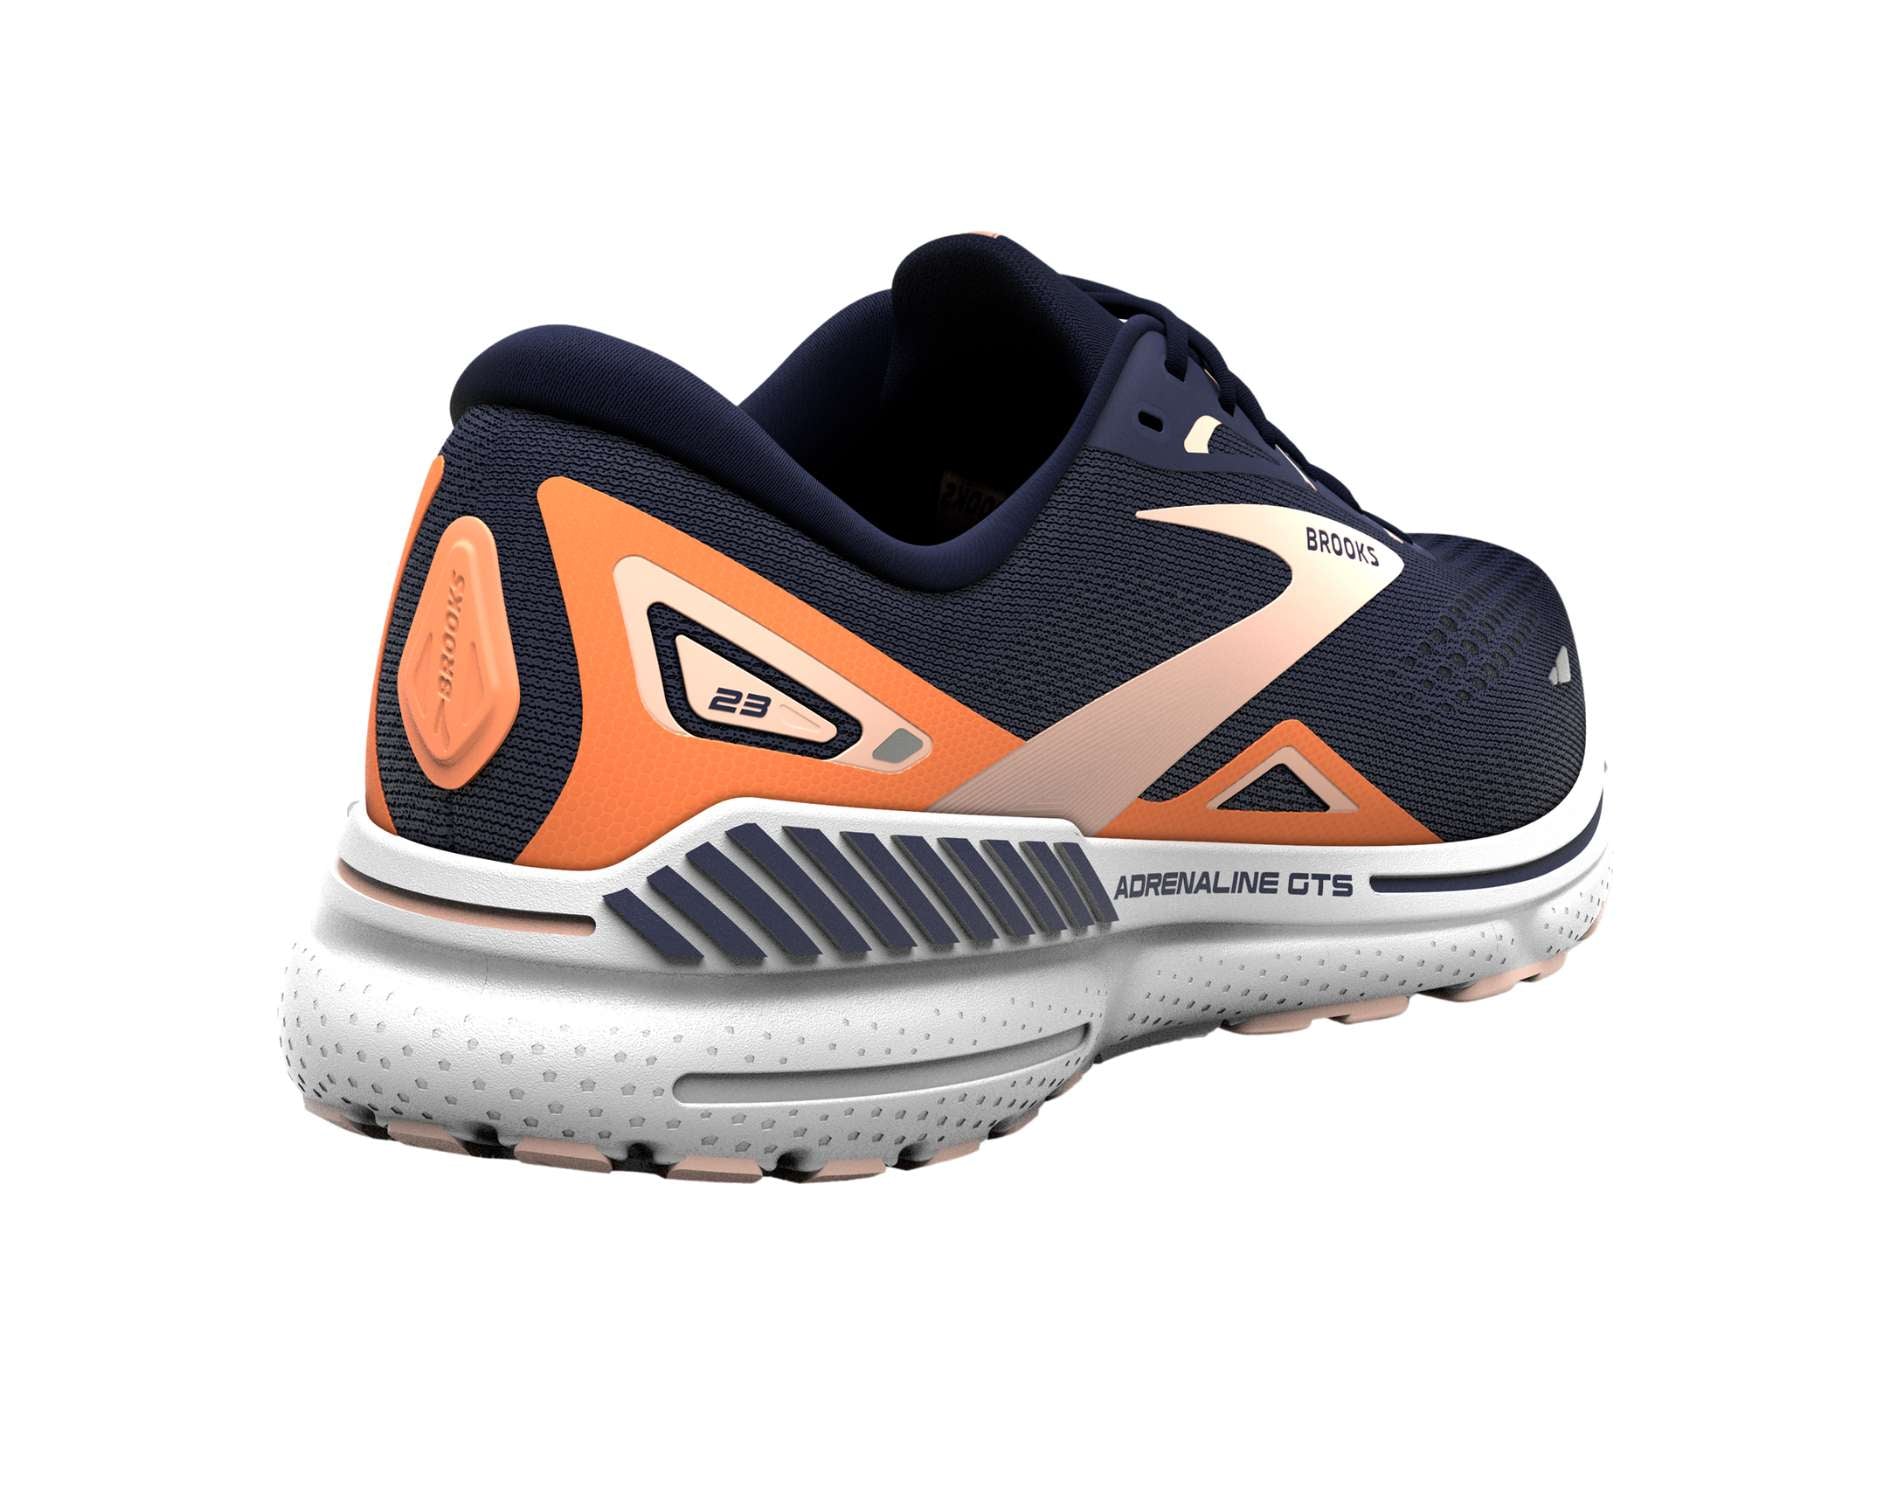 Brooks Adrenaline GTS 23 womens running shoe in standard width in peacoat tangerine peach colour